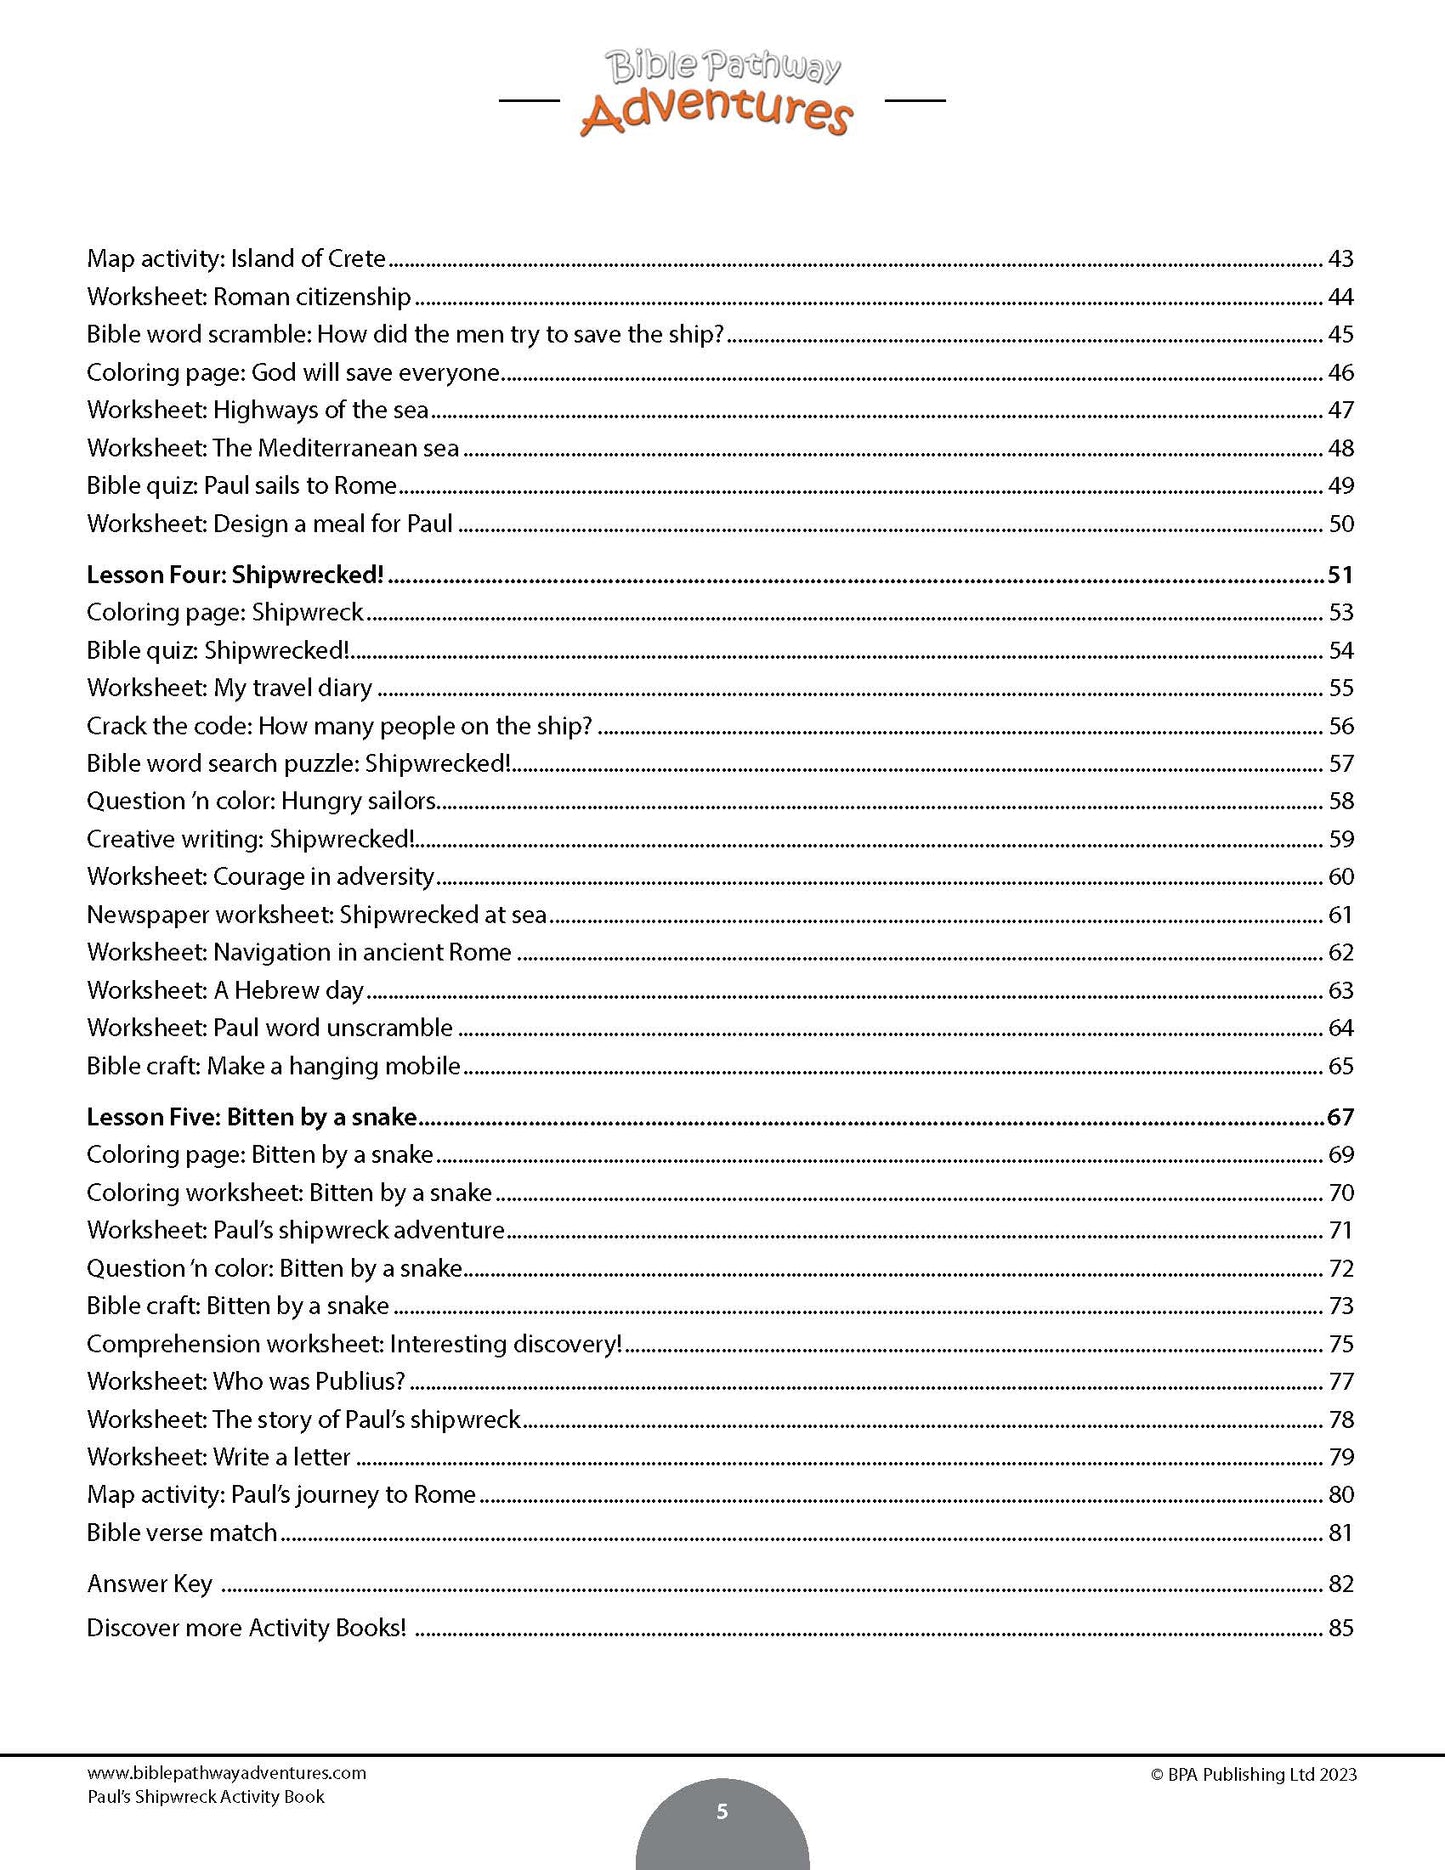 Paul's Shipwreck Activity Book (PDF)